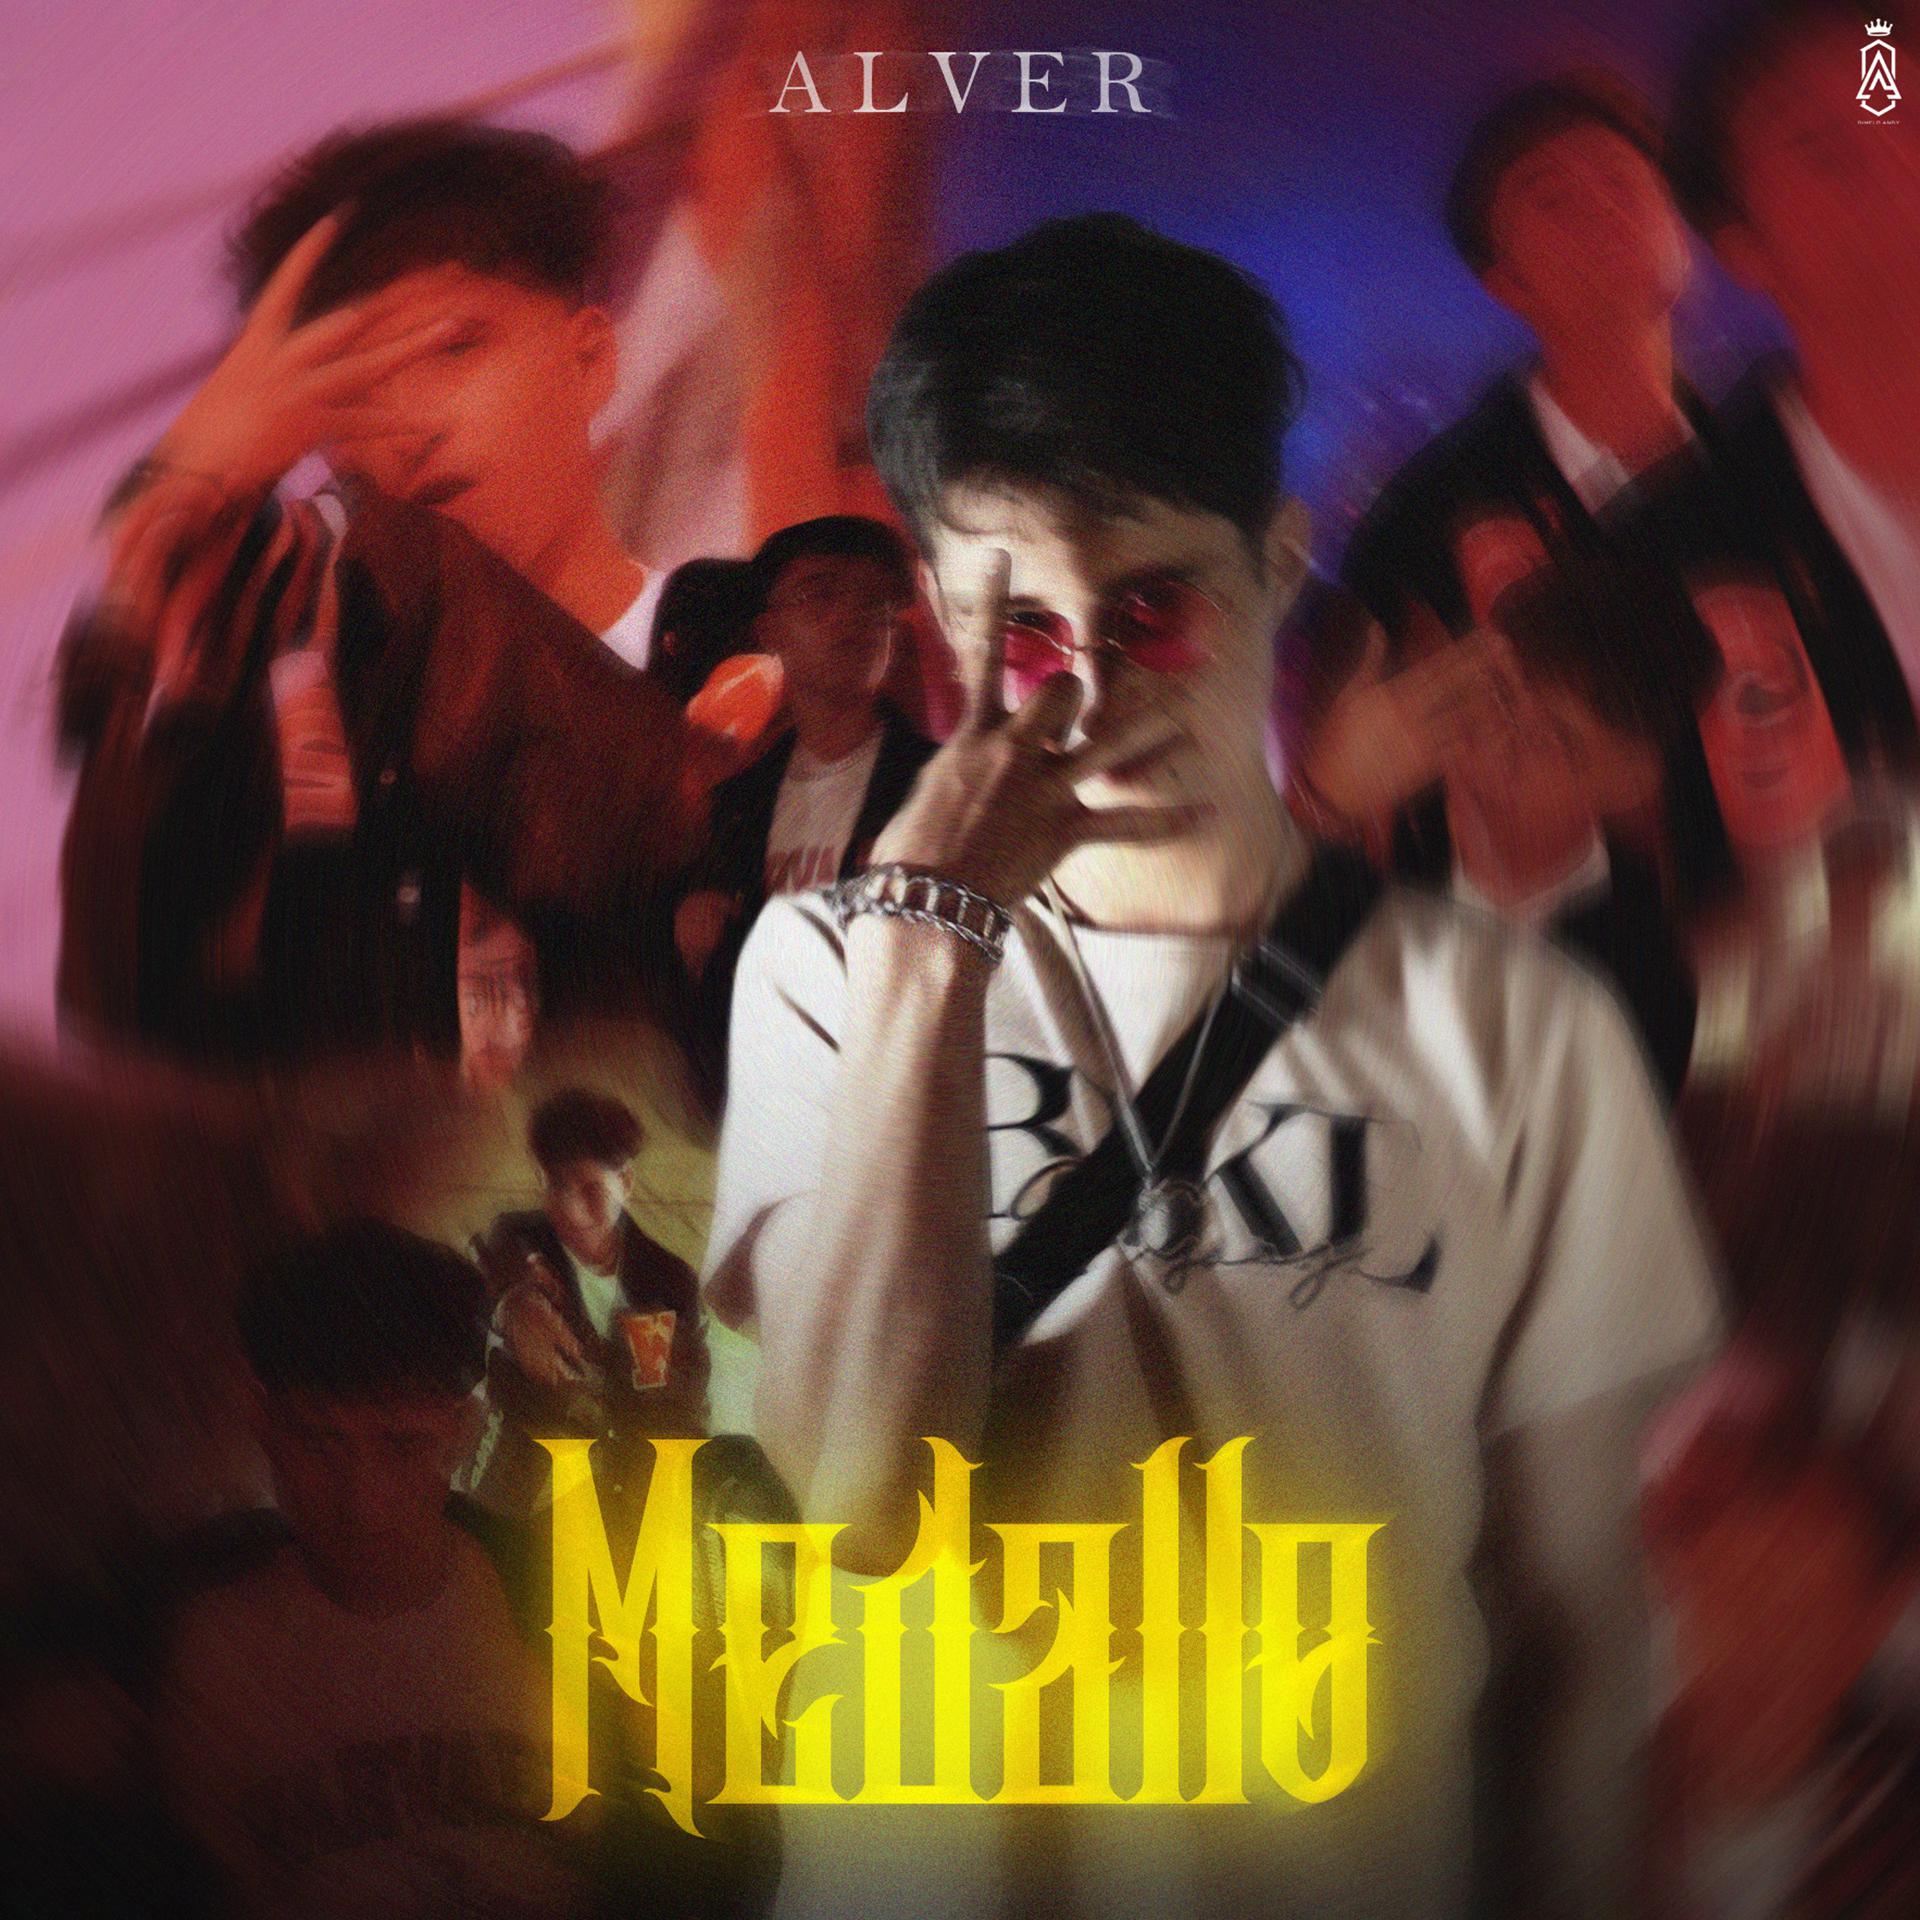 Постер альбома Medallo